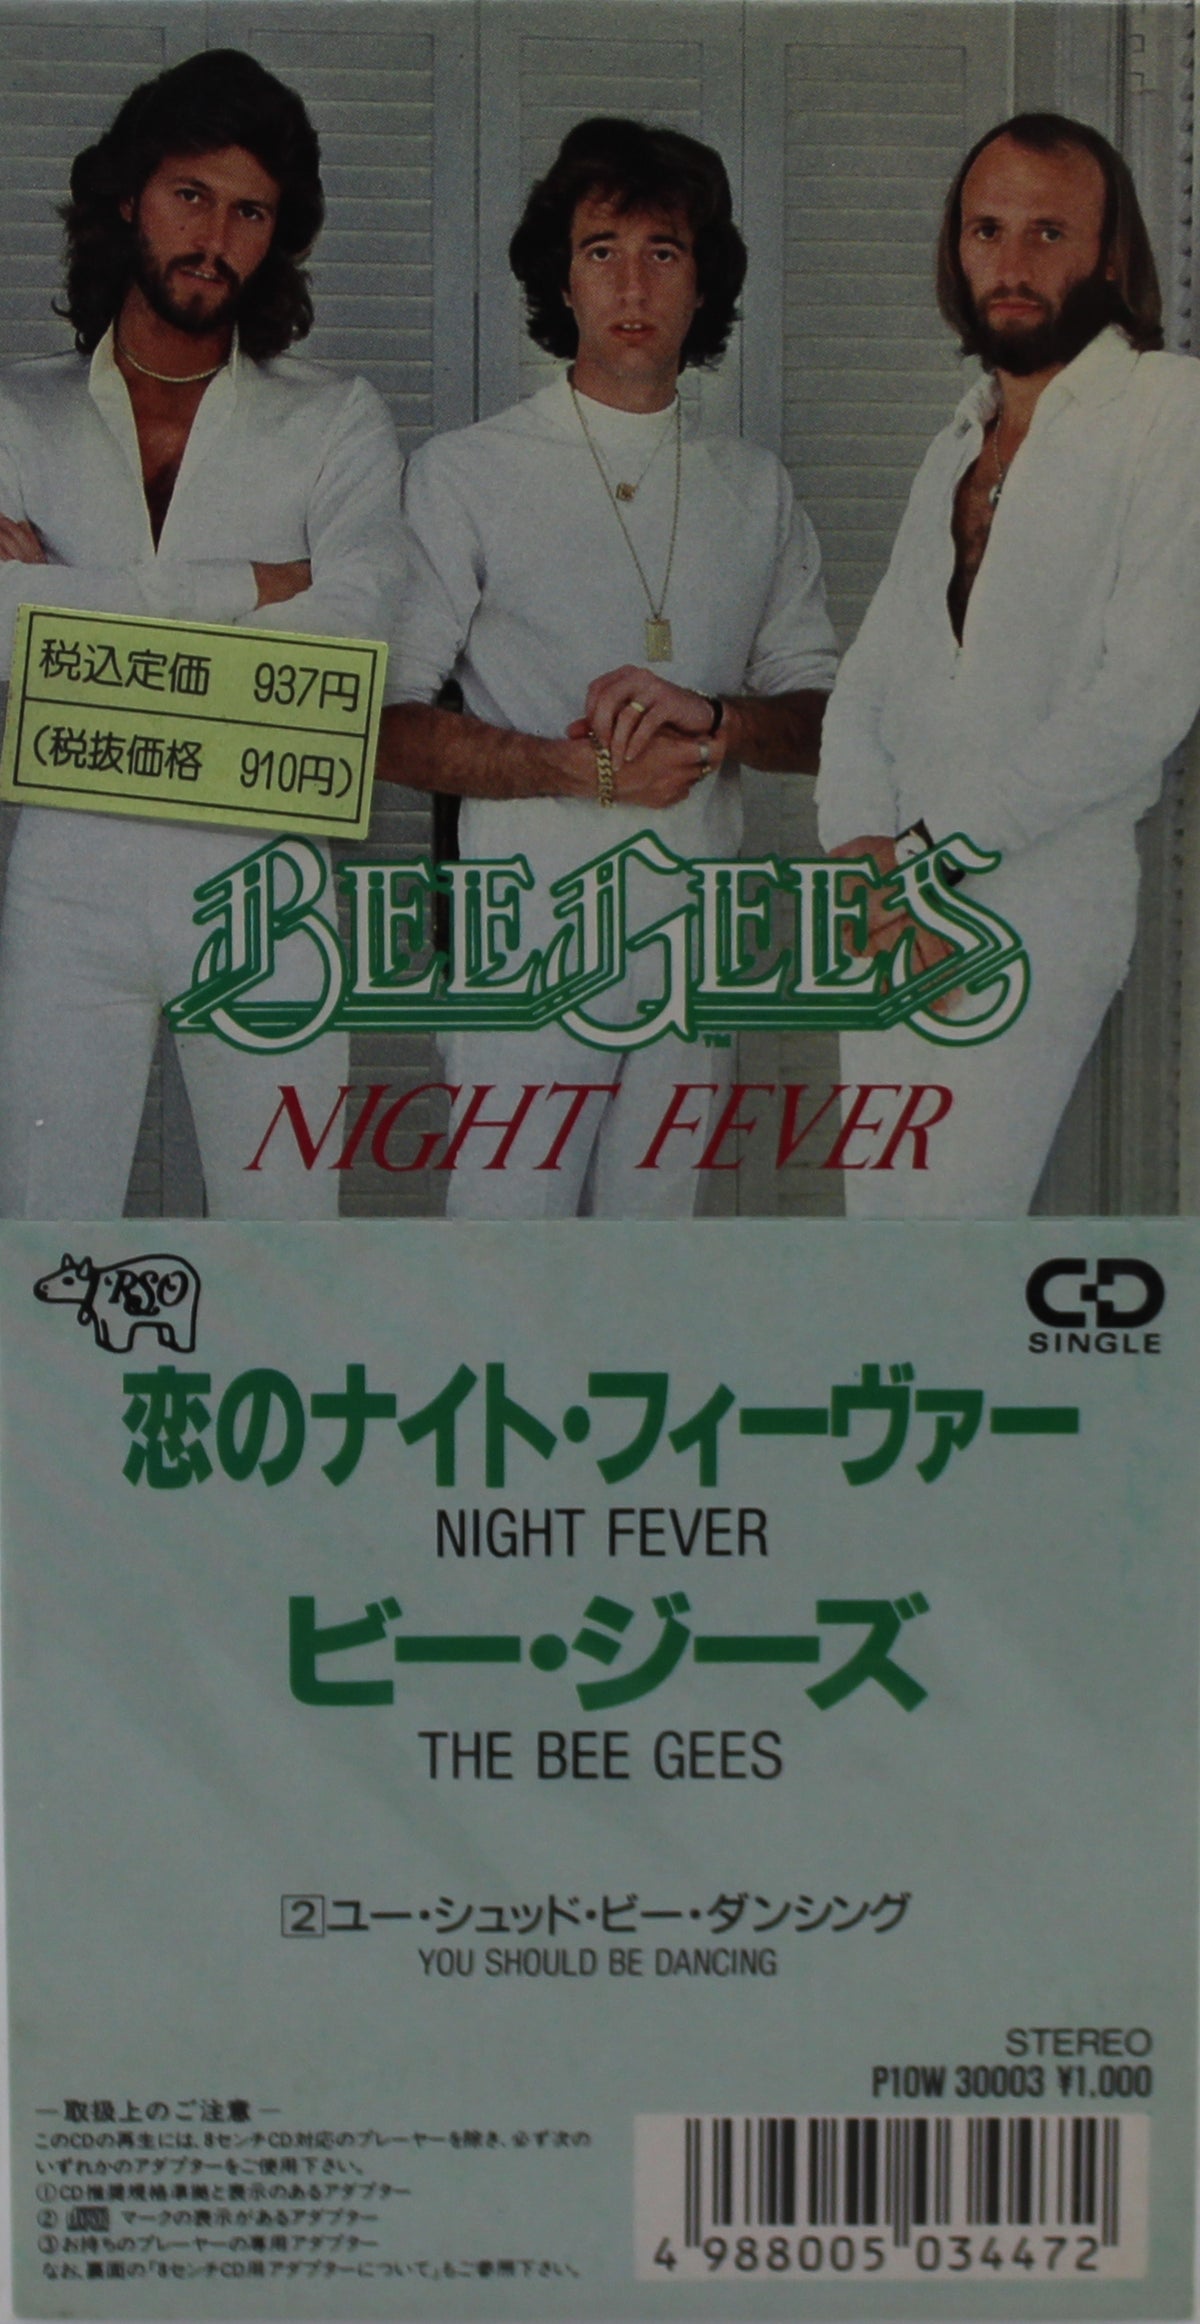 Bee Gees – Night Fever / You Should Be Dancing, CD Mini Single PROMO, Japan 1988 (CD 620)